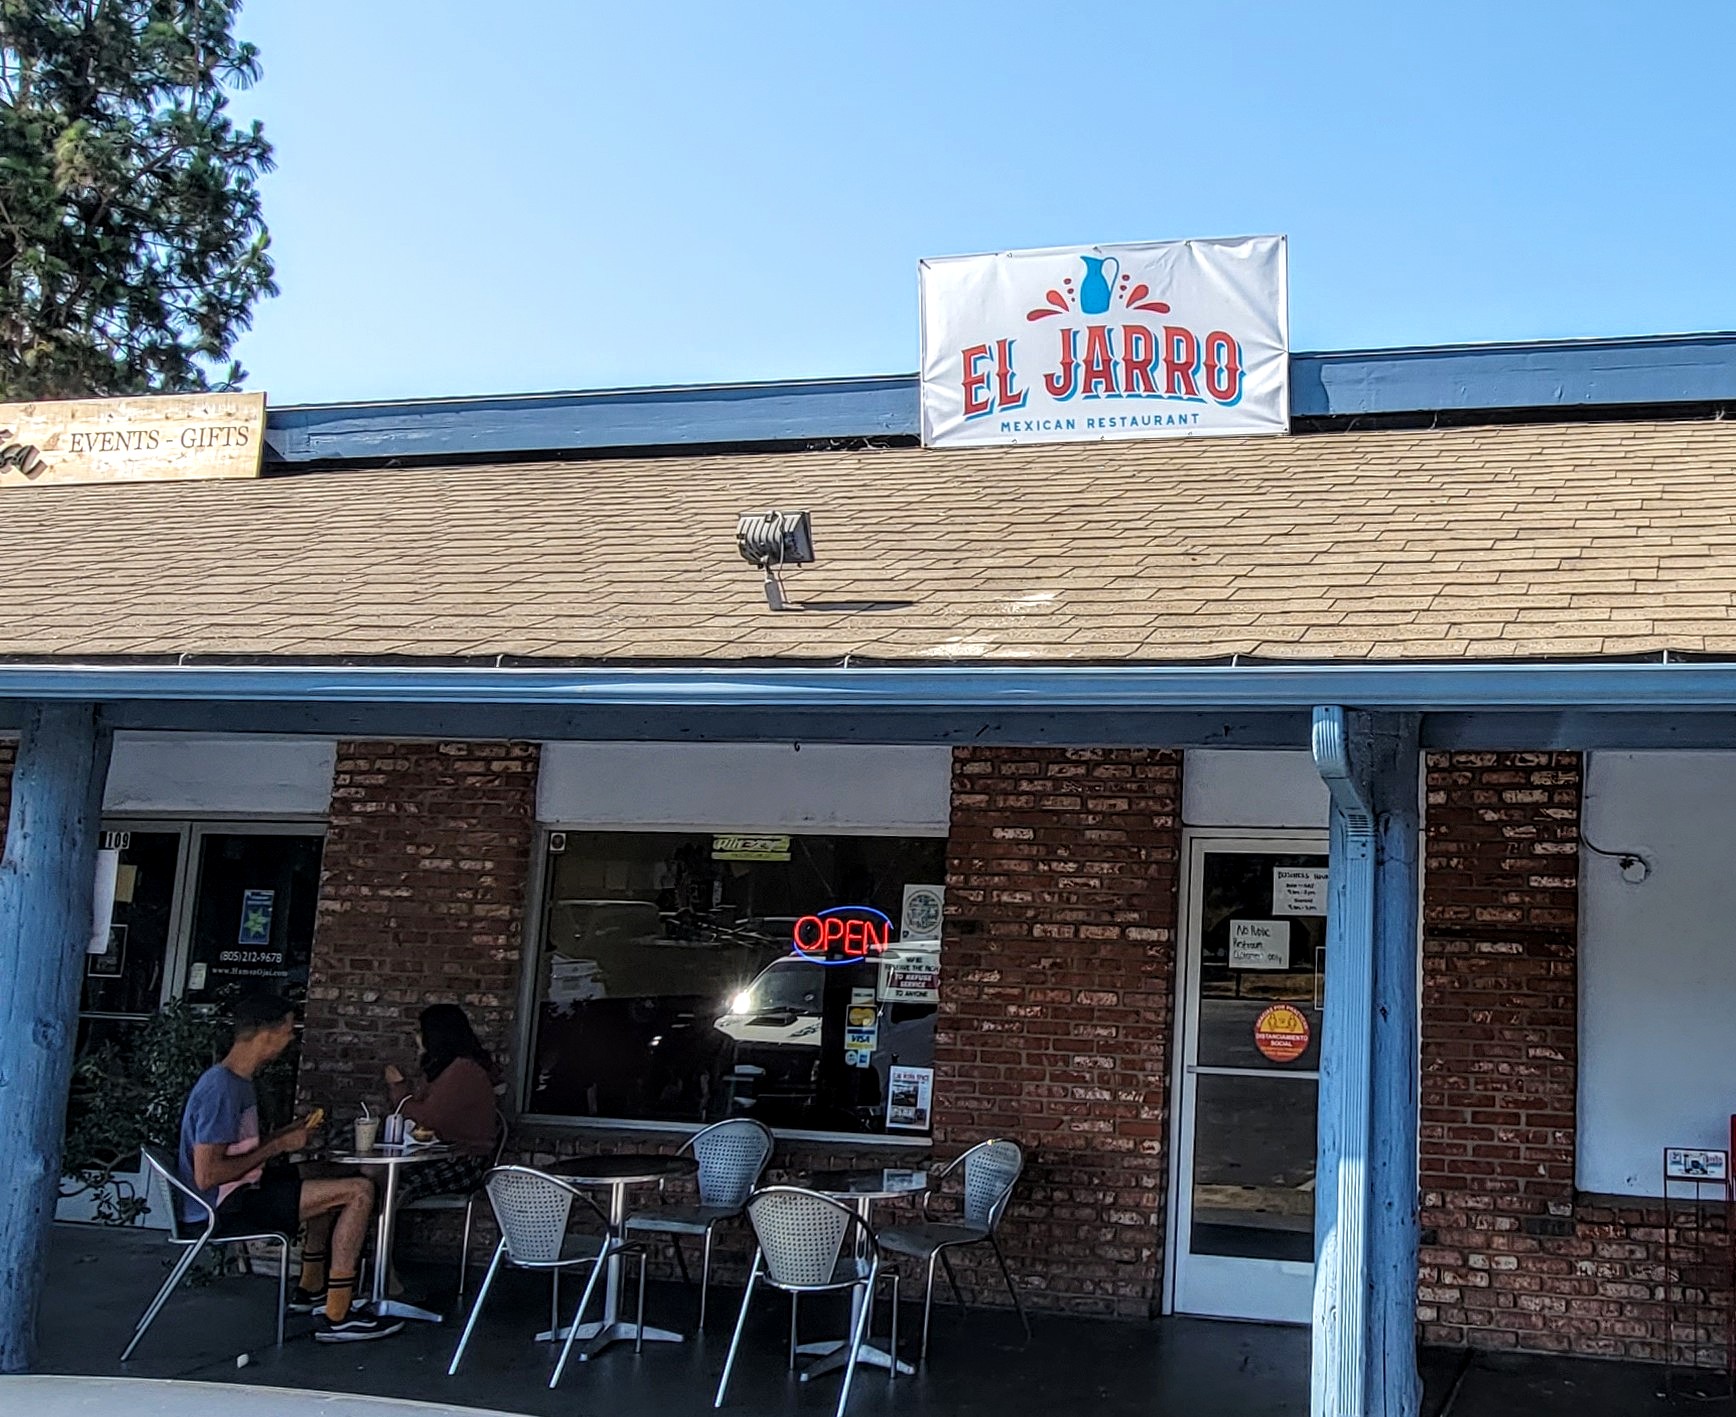 El Jarro Mexican Restaurant